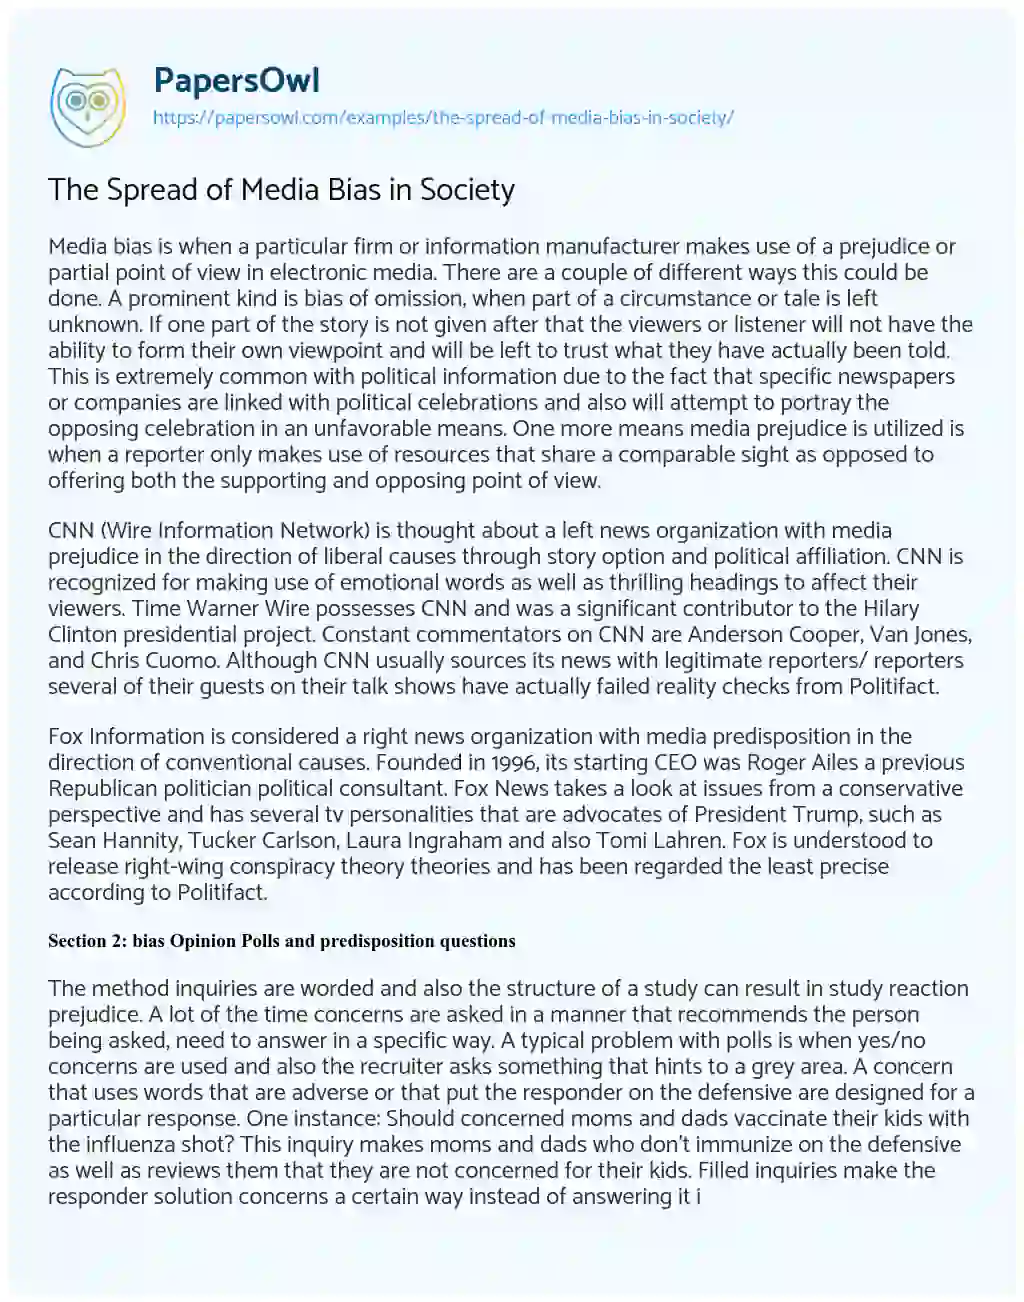 Essay on The Spread of Media Bias in Society